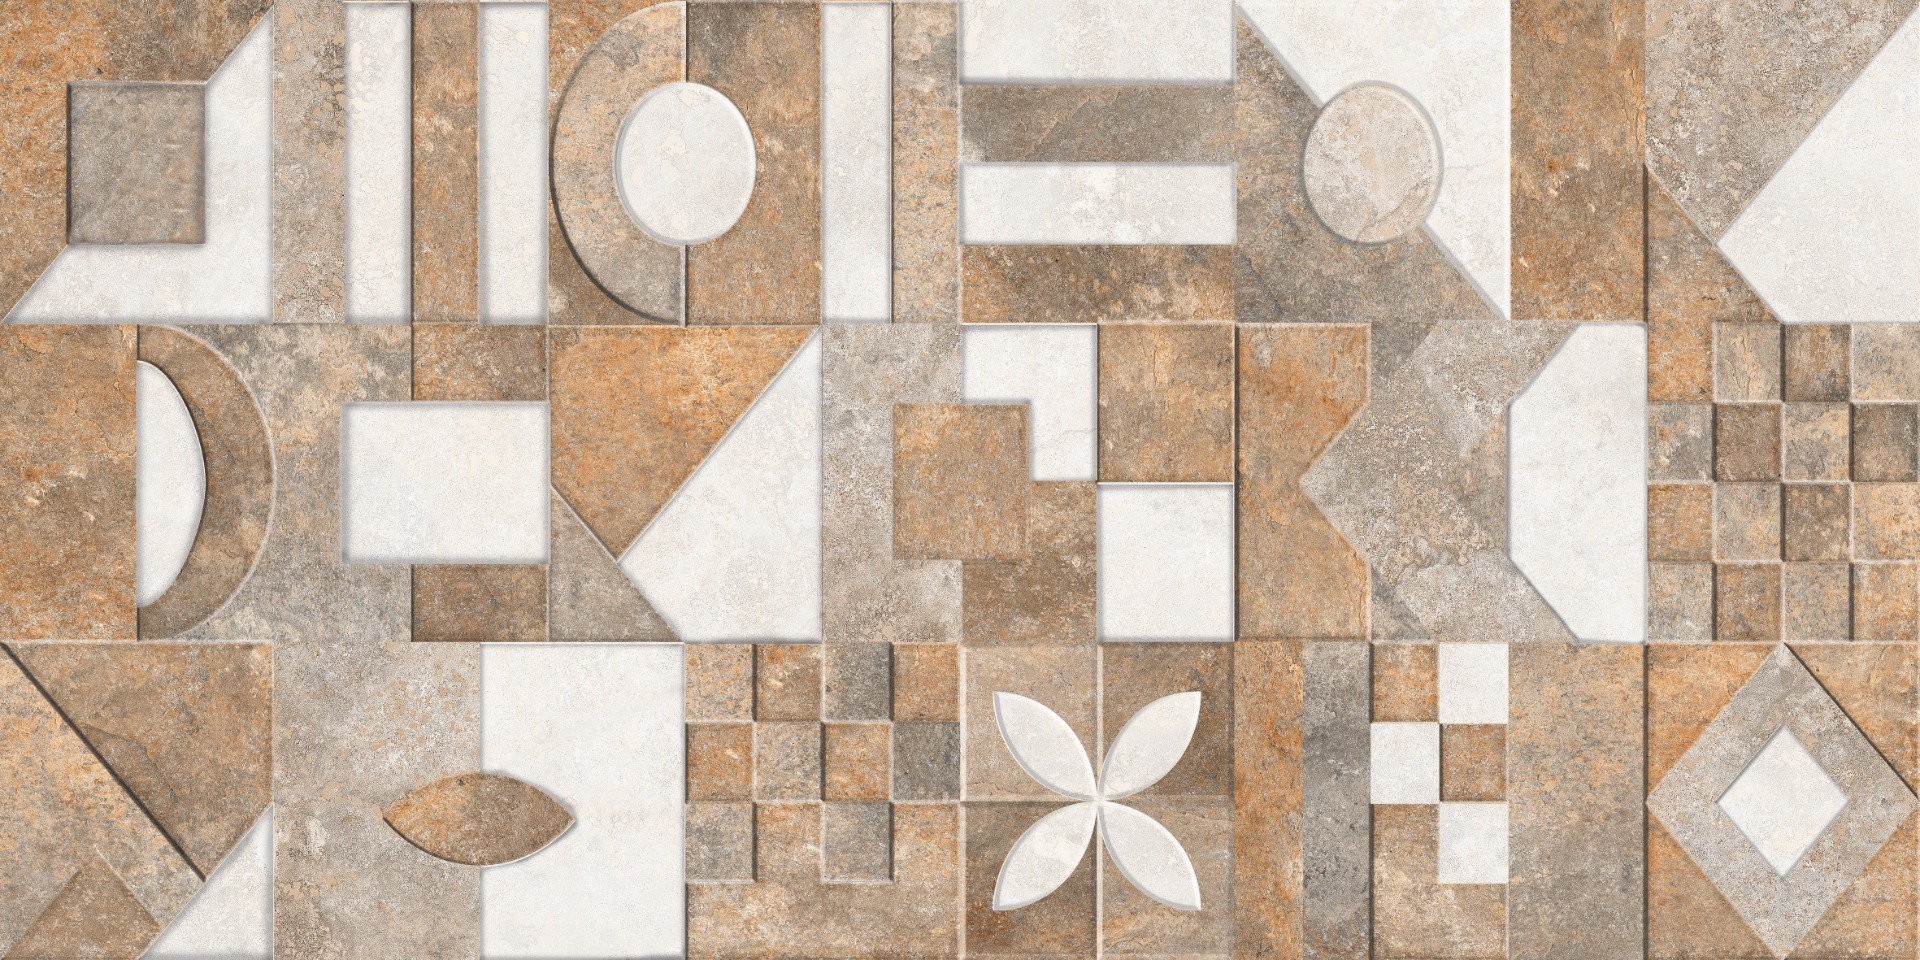 600x1200 MM Tiles for Bathroom Tiles, Living Room Tiles, Bedroom Tiles, Accent Tiles, Hospital Tiles, High Traffic Tiles, Bar/Restaurant, Commercial/Office, Outdoor Area